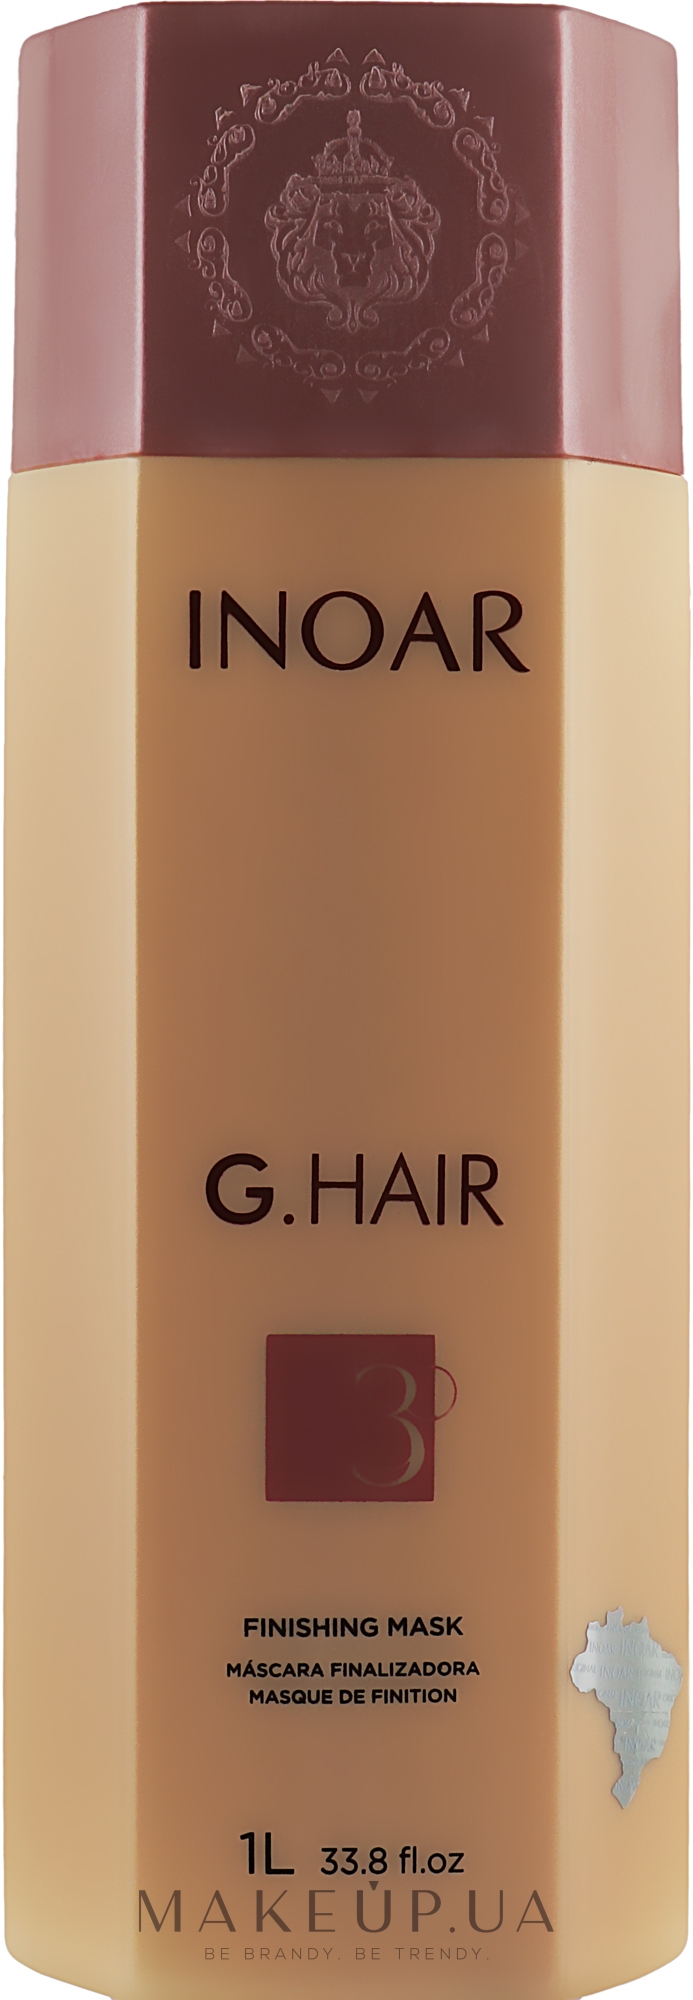 Закрепляющая маска для волос - Inoar G-Hair 3 Premium Finishing Mask — фото 1000ml